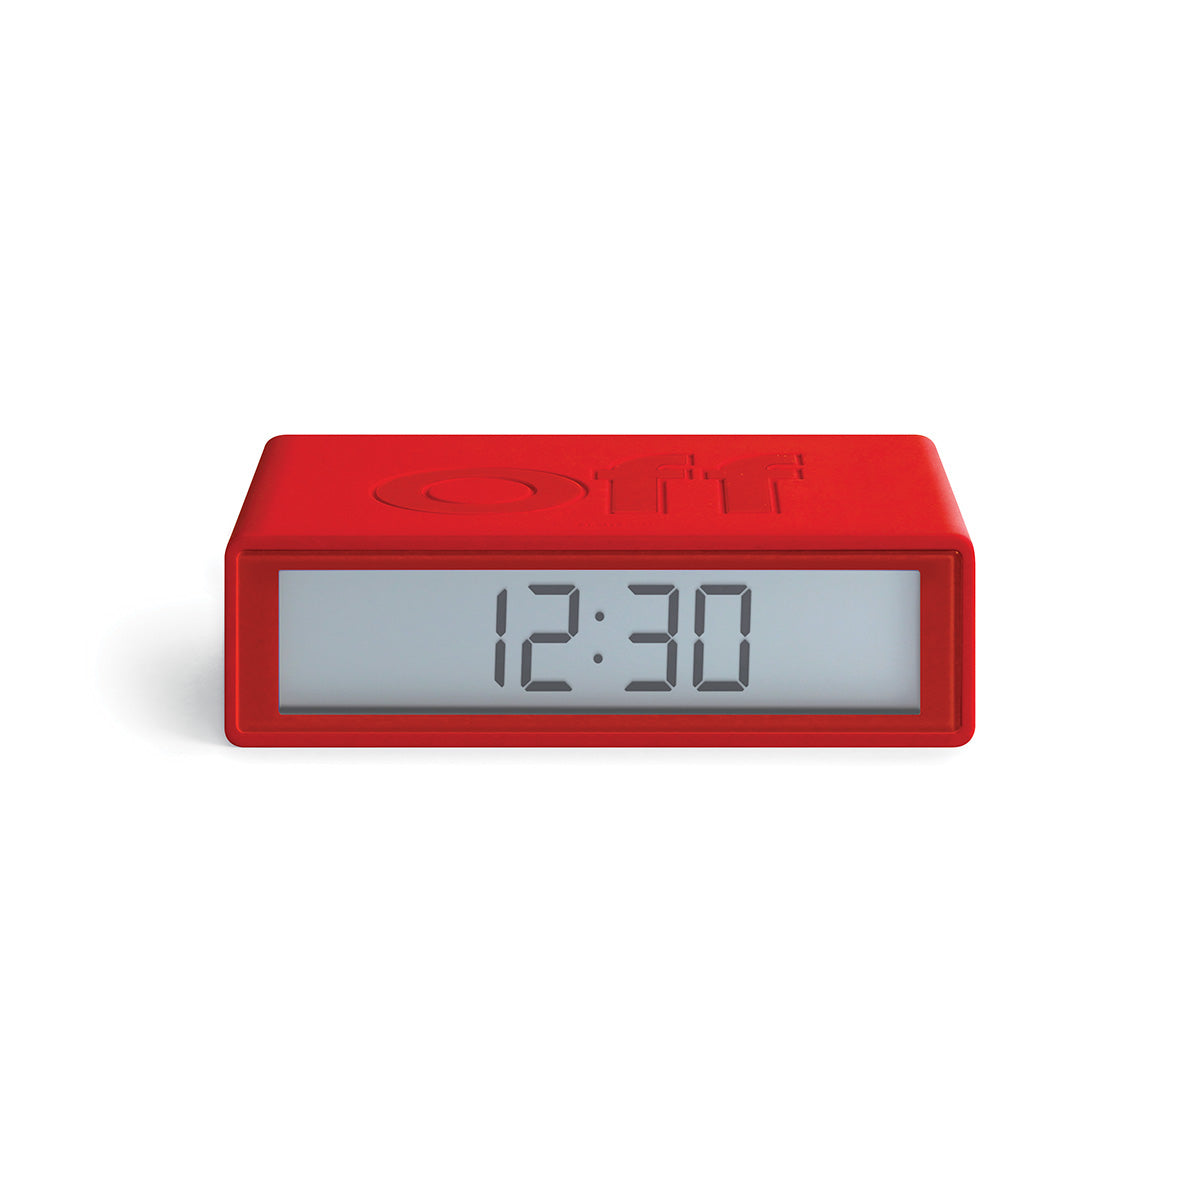 Lexon Flip+ Travel LCD Alarm Clock